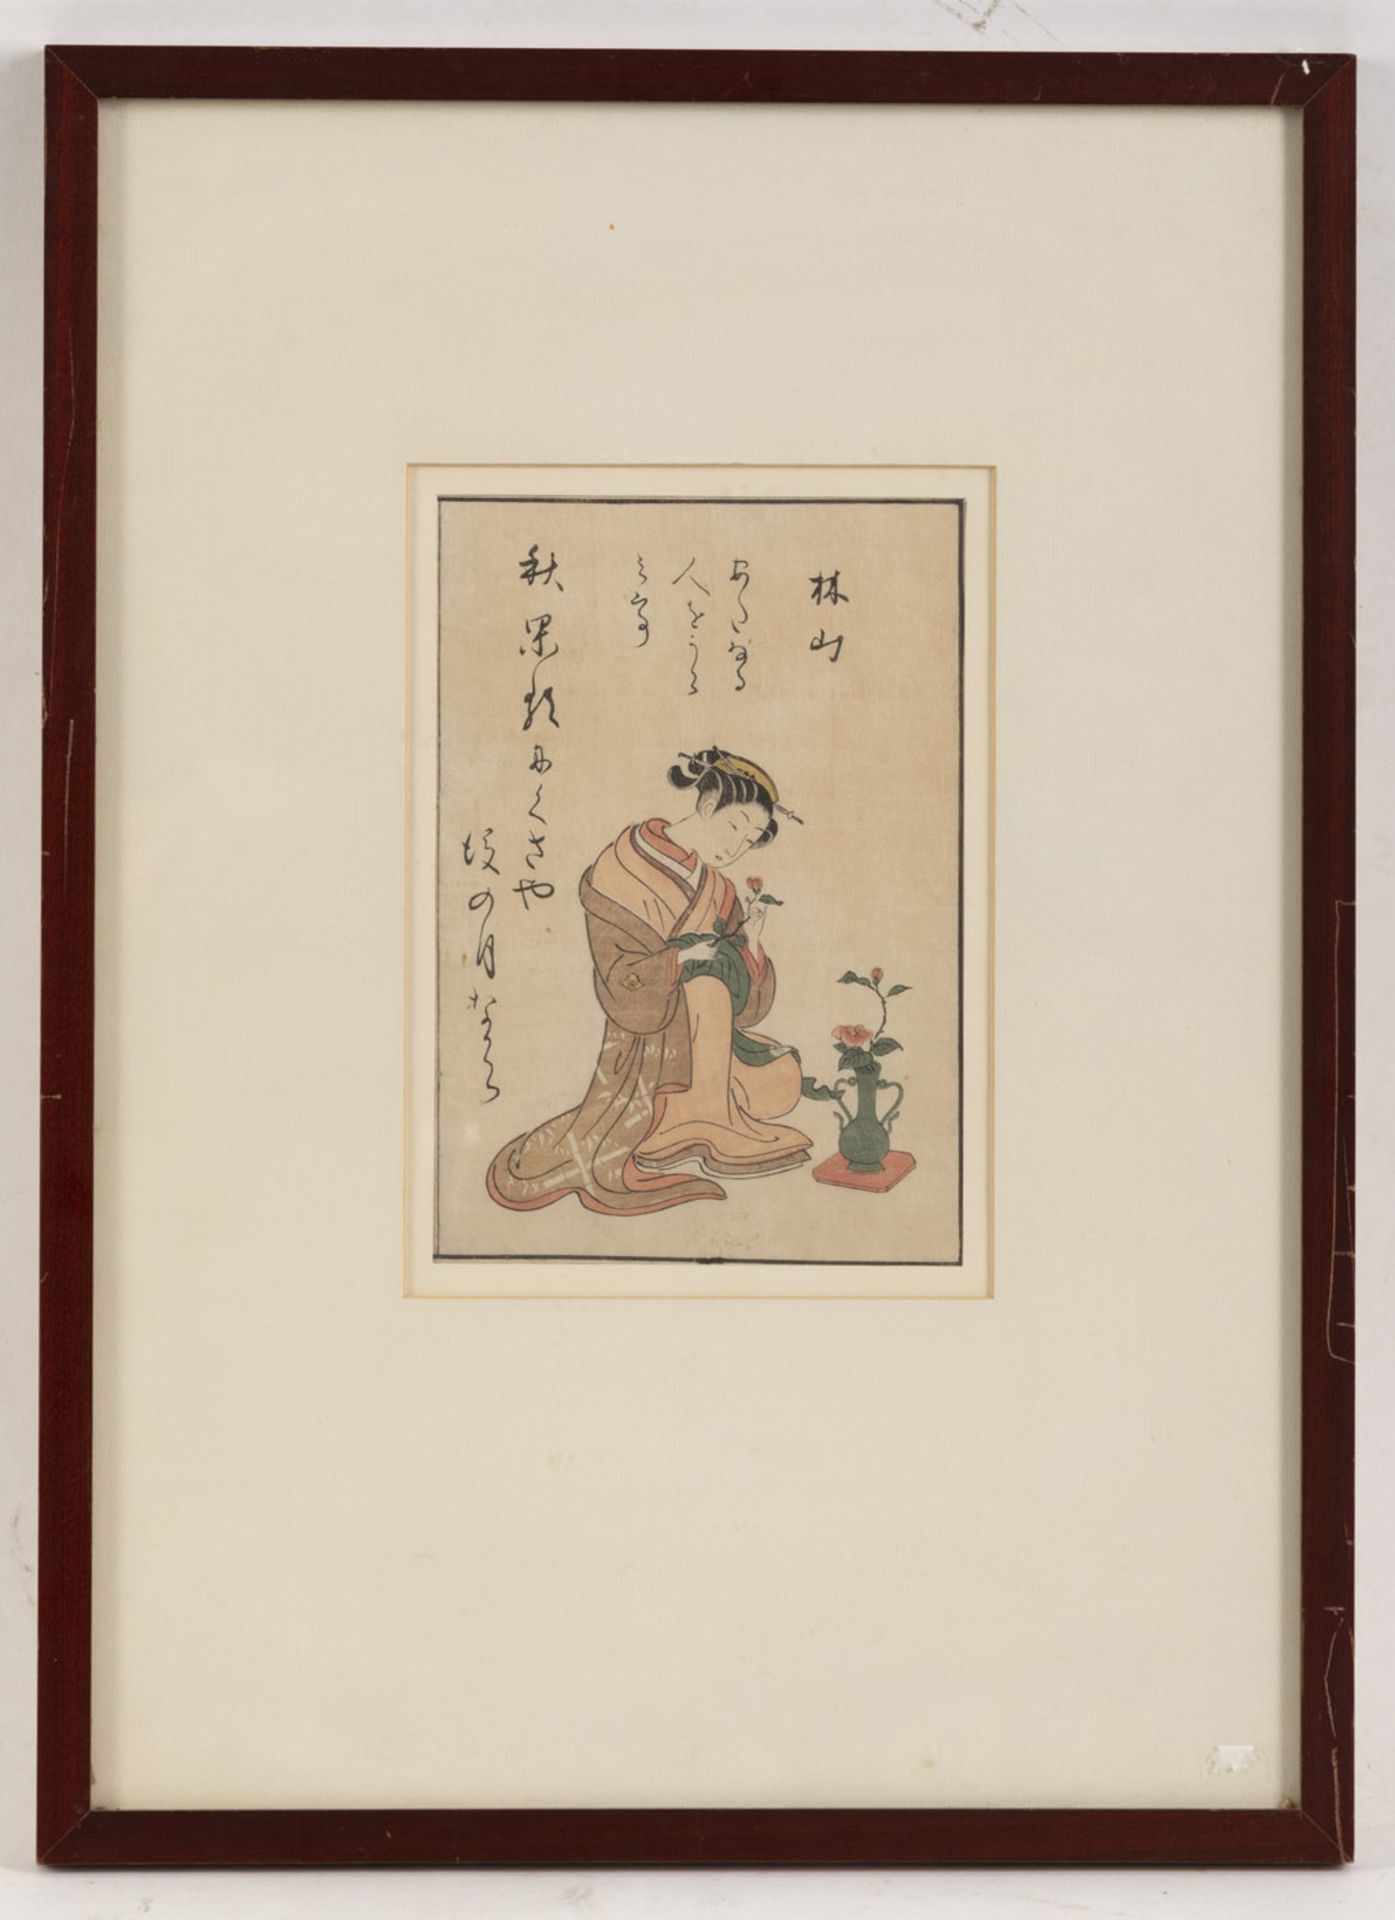 A PRINT BY SUZUKI HARUNOBU FROM THE 'SEIRO BIJIN AWASE' - Image 2 of 2